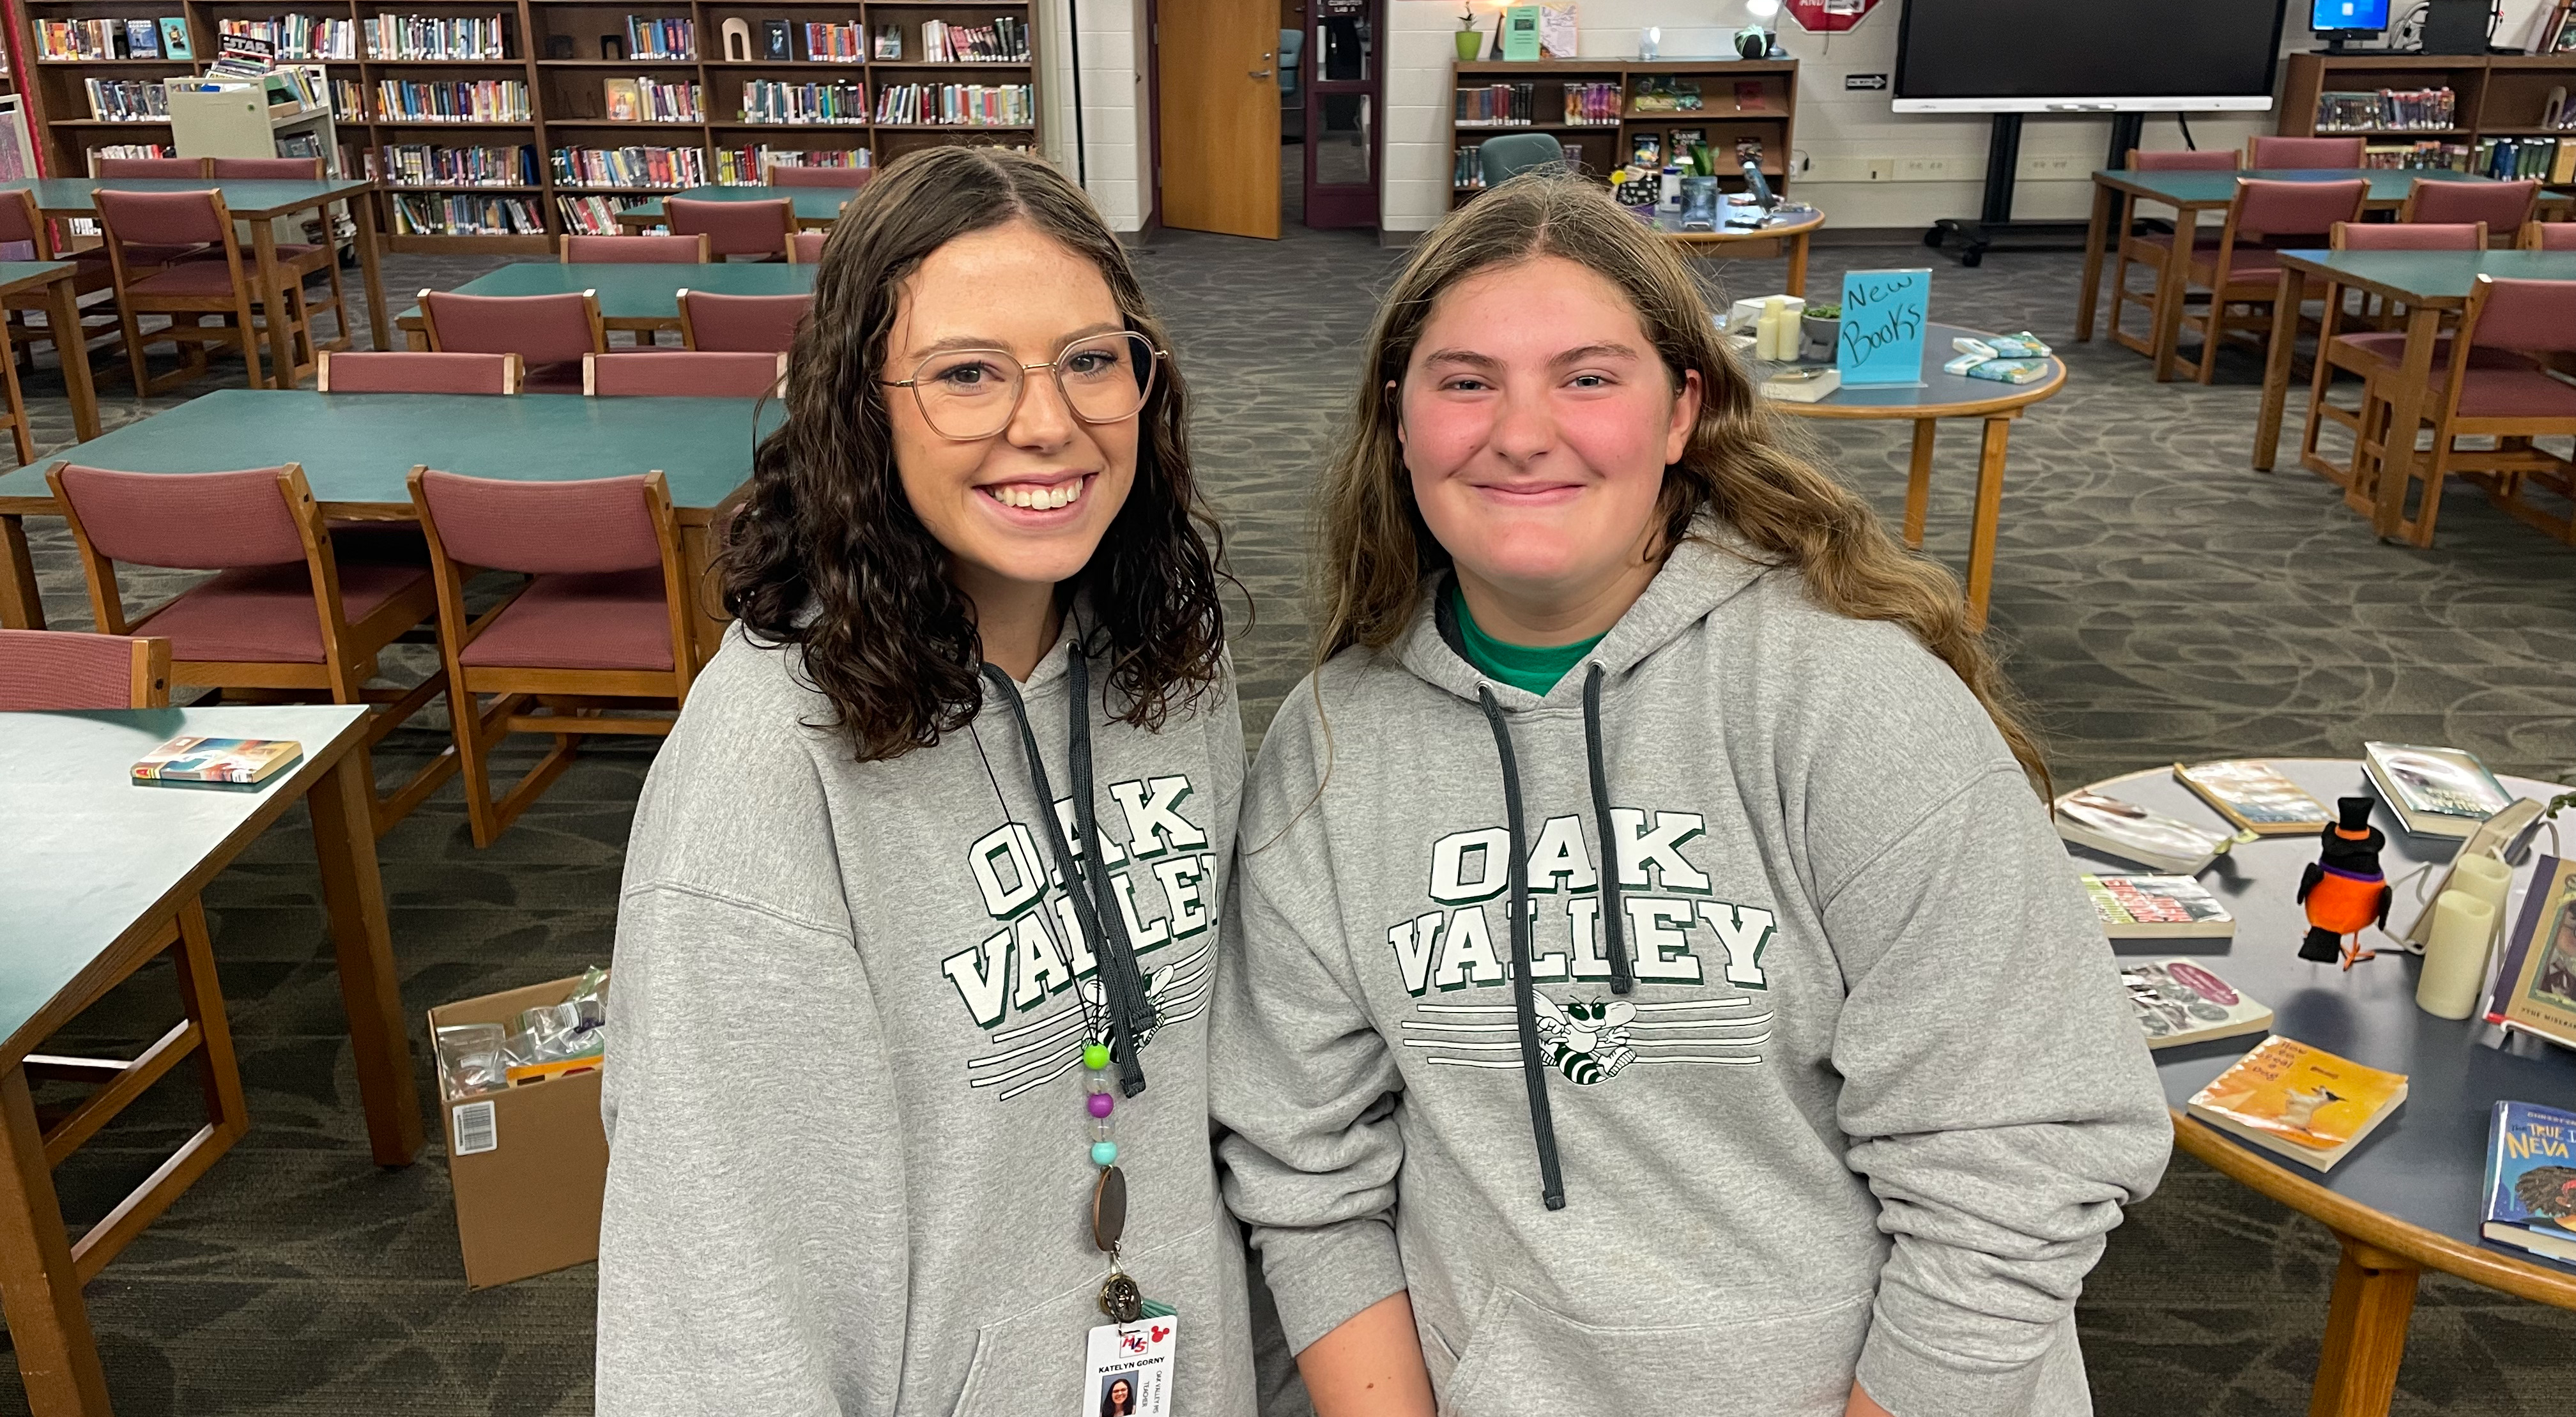 Mrs. Gorny and student wearing matching OVMS sweatshirts